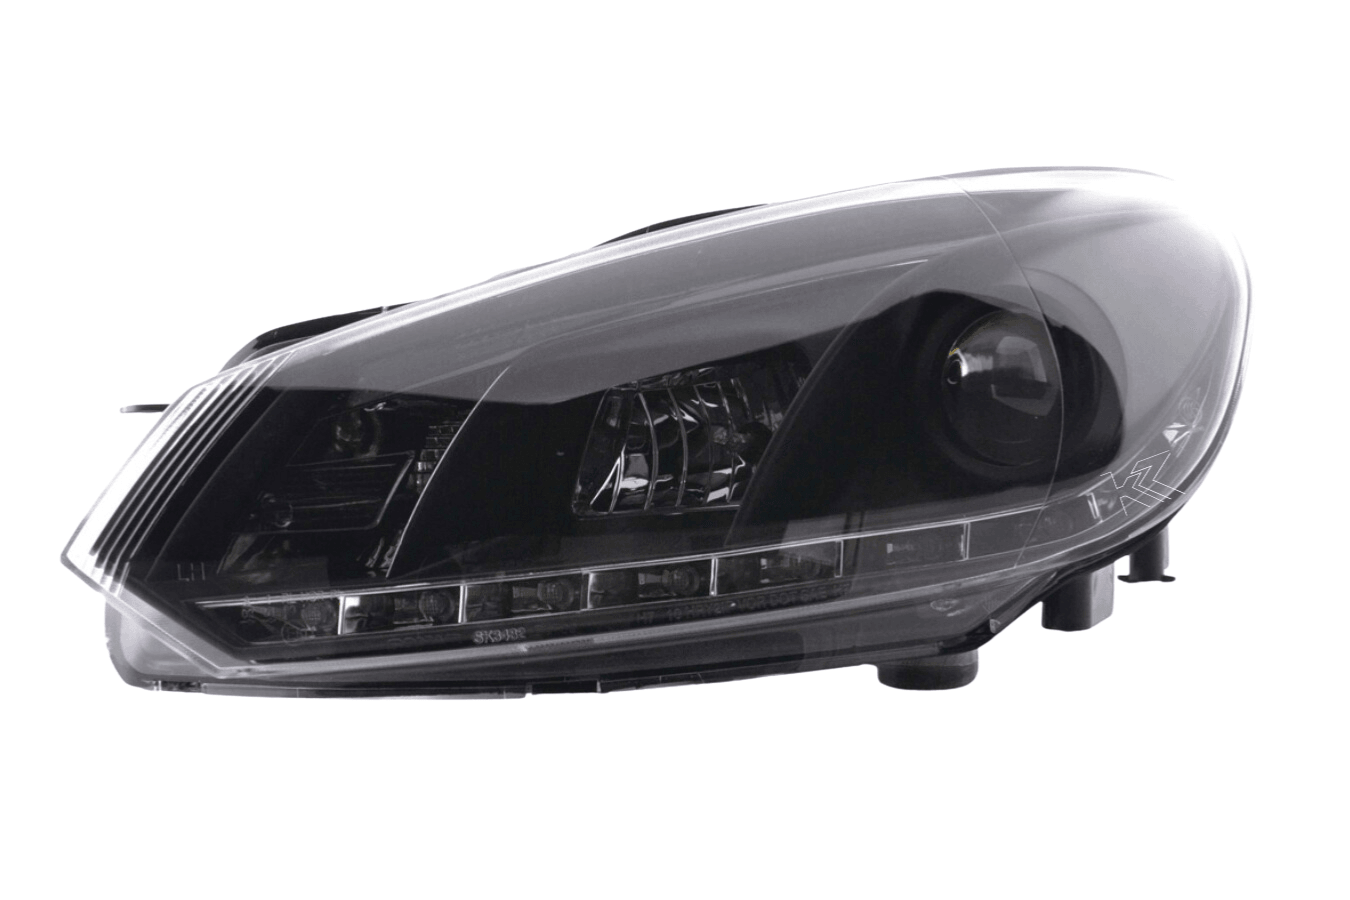 VW Golf 6 LED DRL, HID Bi Xenon MK7.5 Style Headlight (2009-2012)